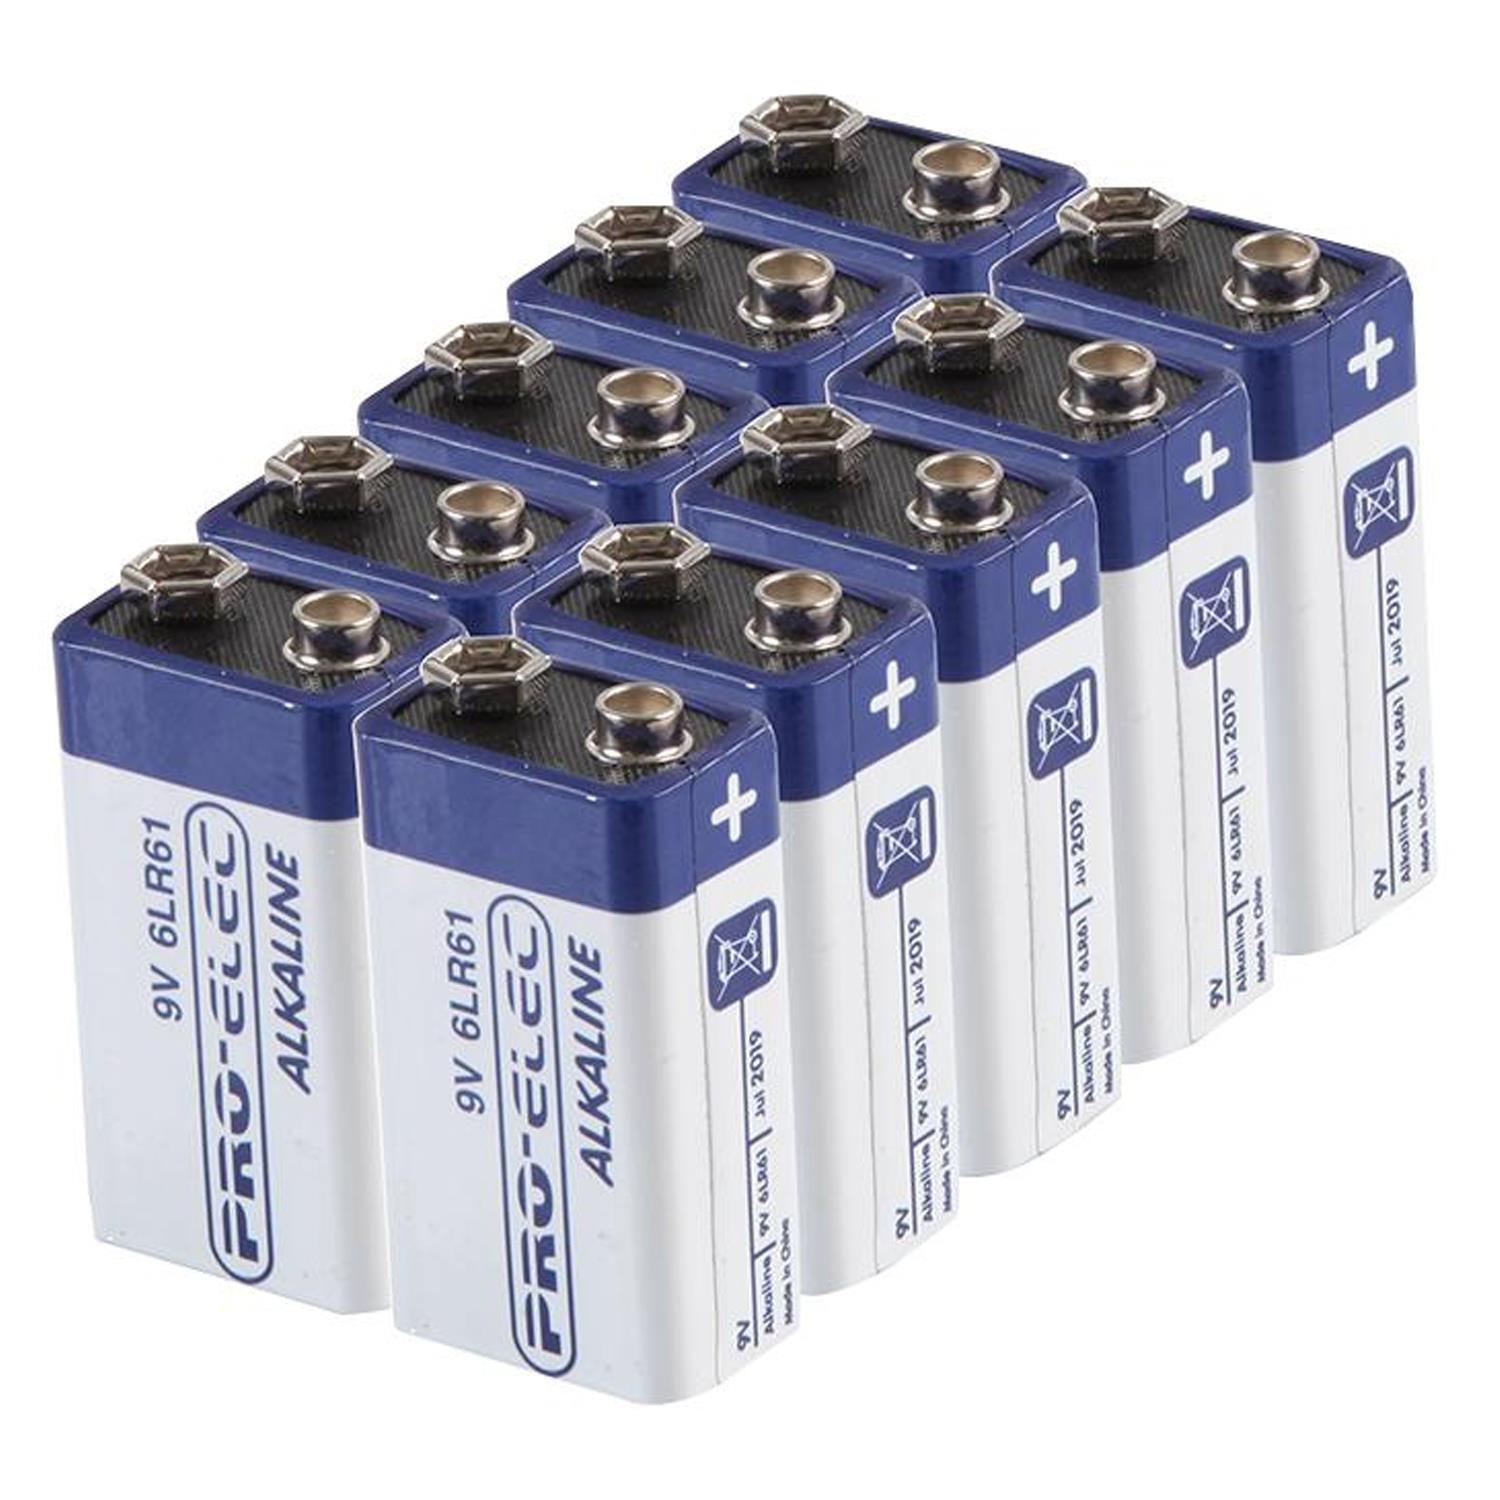 Pro Elec 9v Batteries Ultra Alkaline 10 Pack - DY Pro Audio